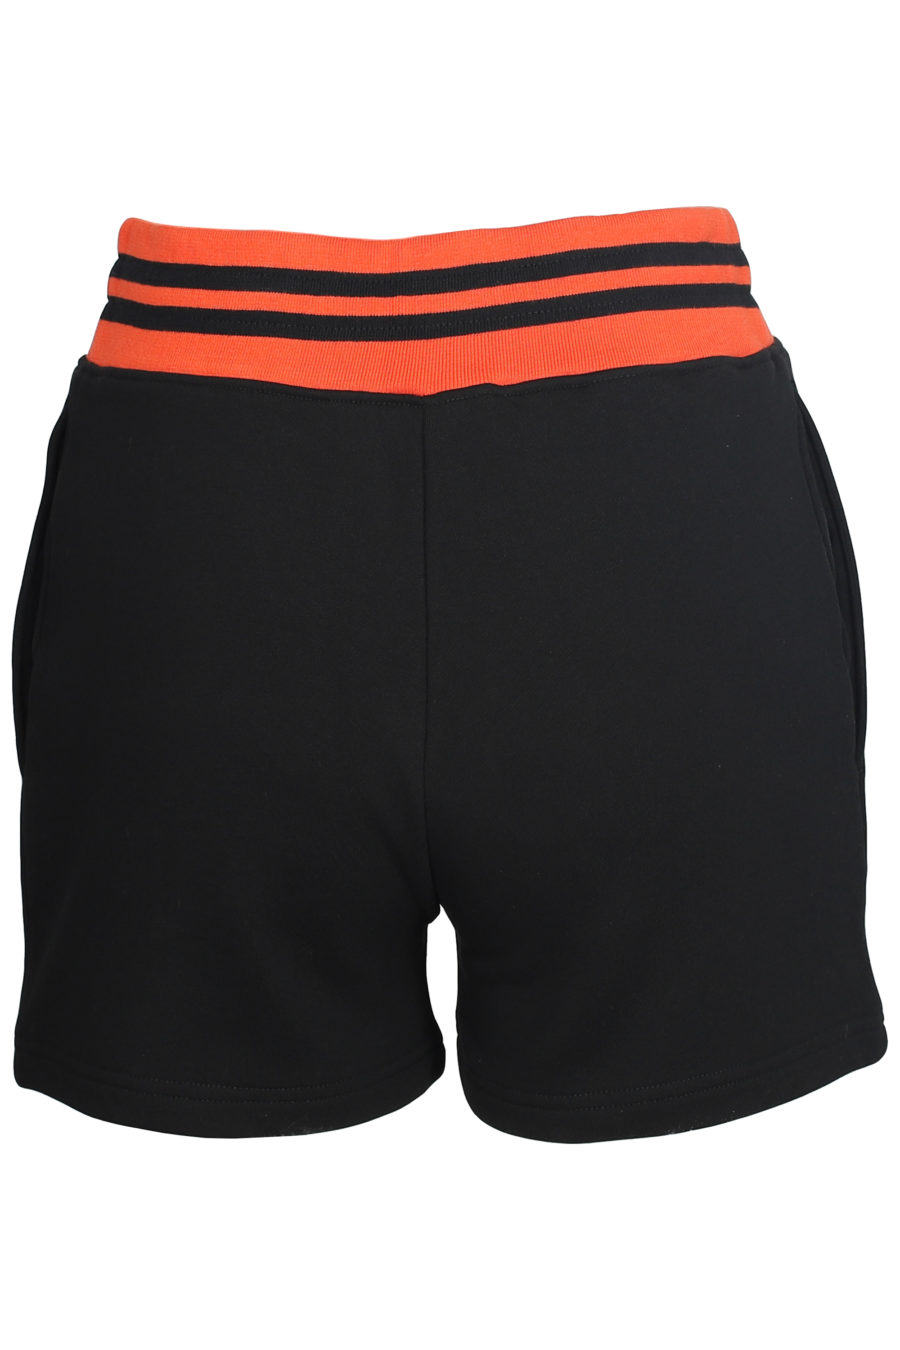 Black shorts with teddy bear - IMG 5595